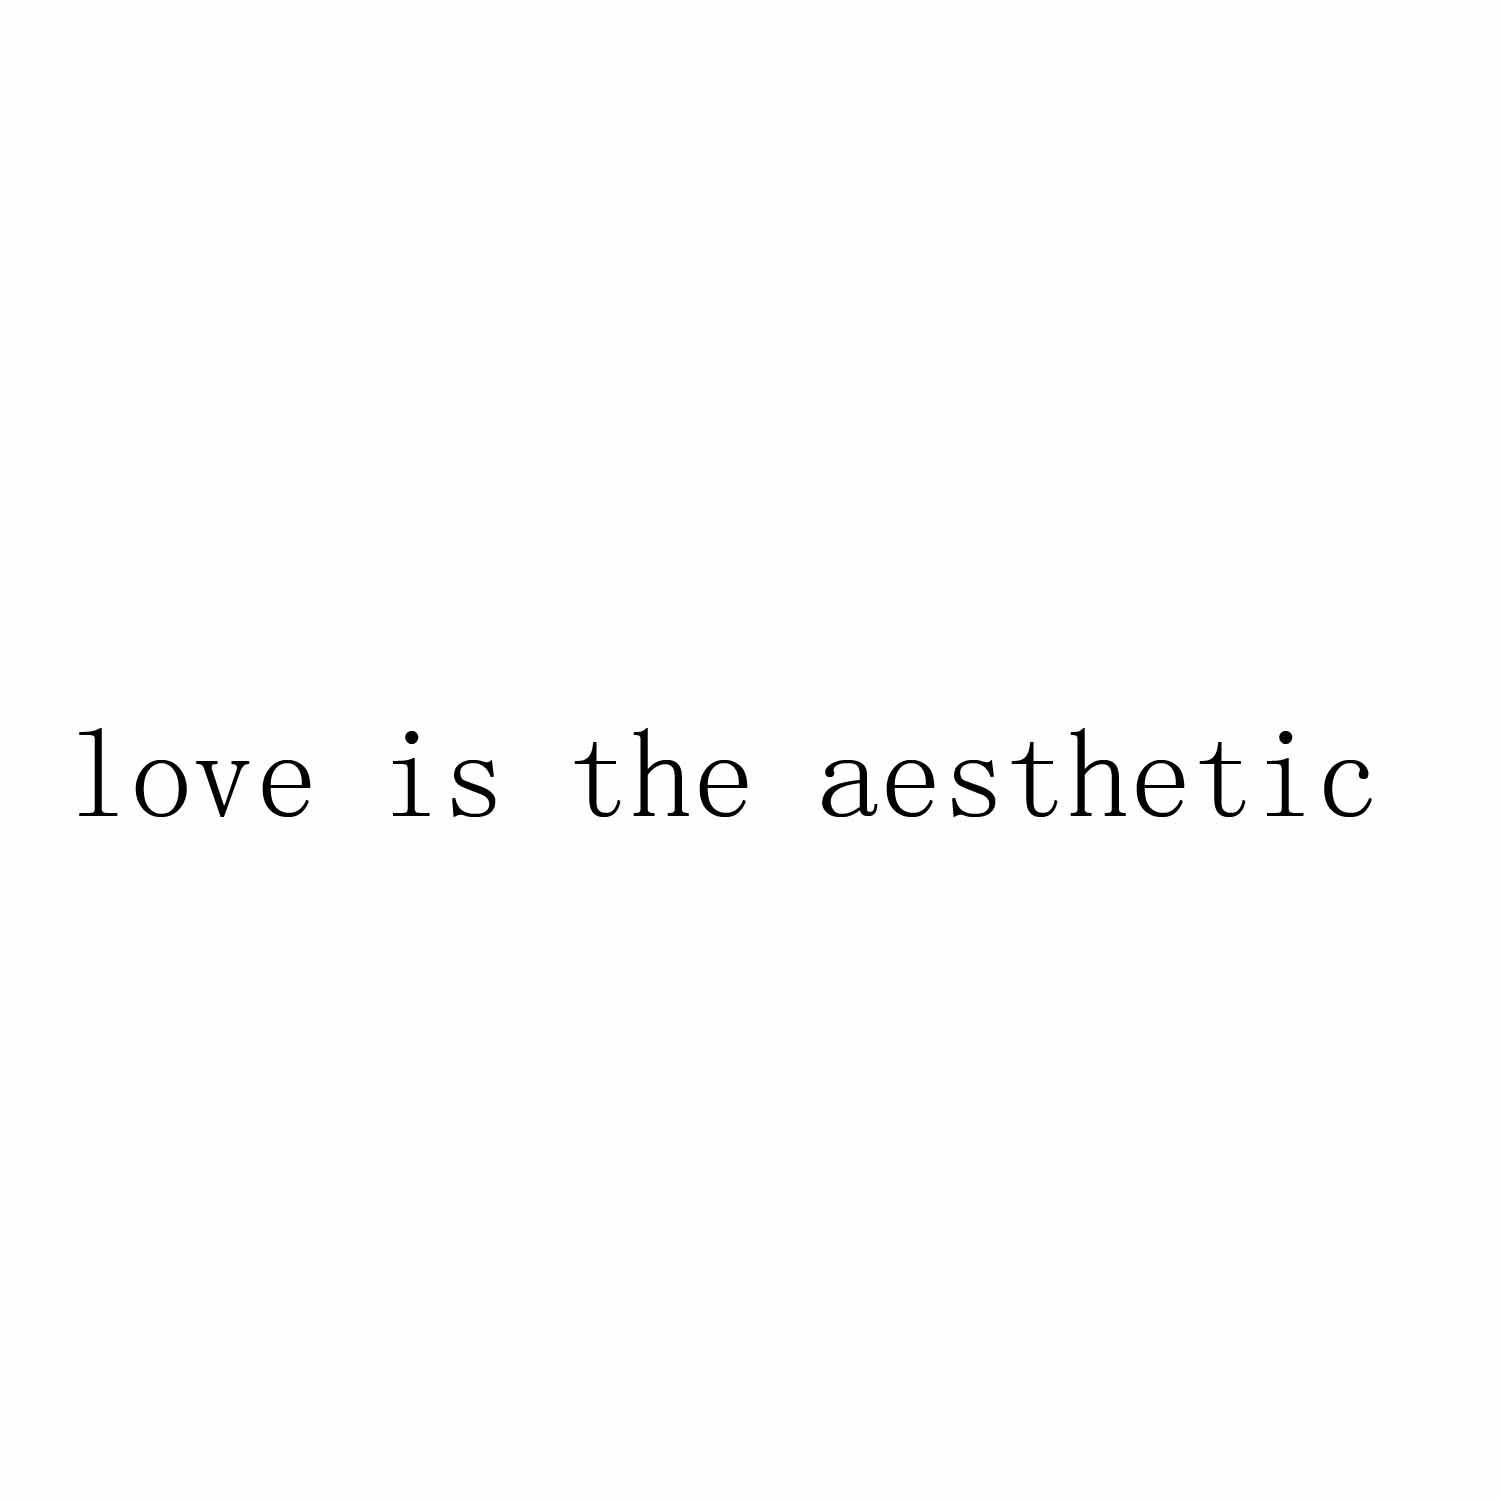 love is the aesthetic商标转让